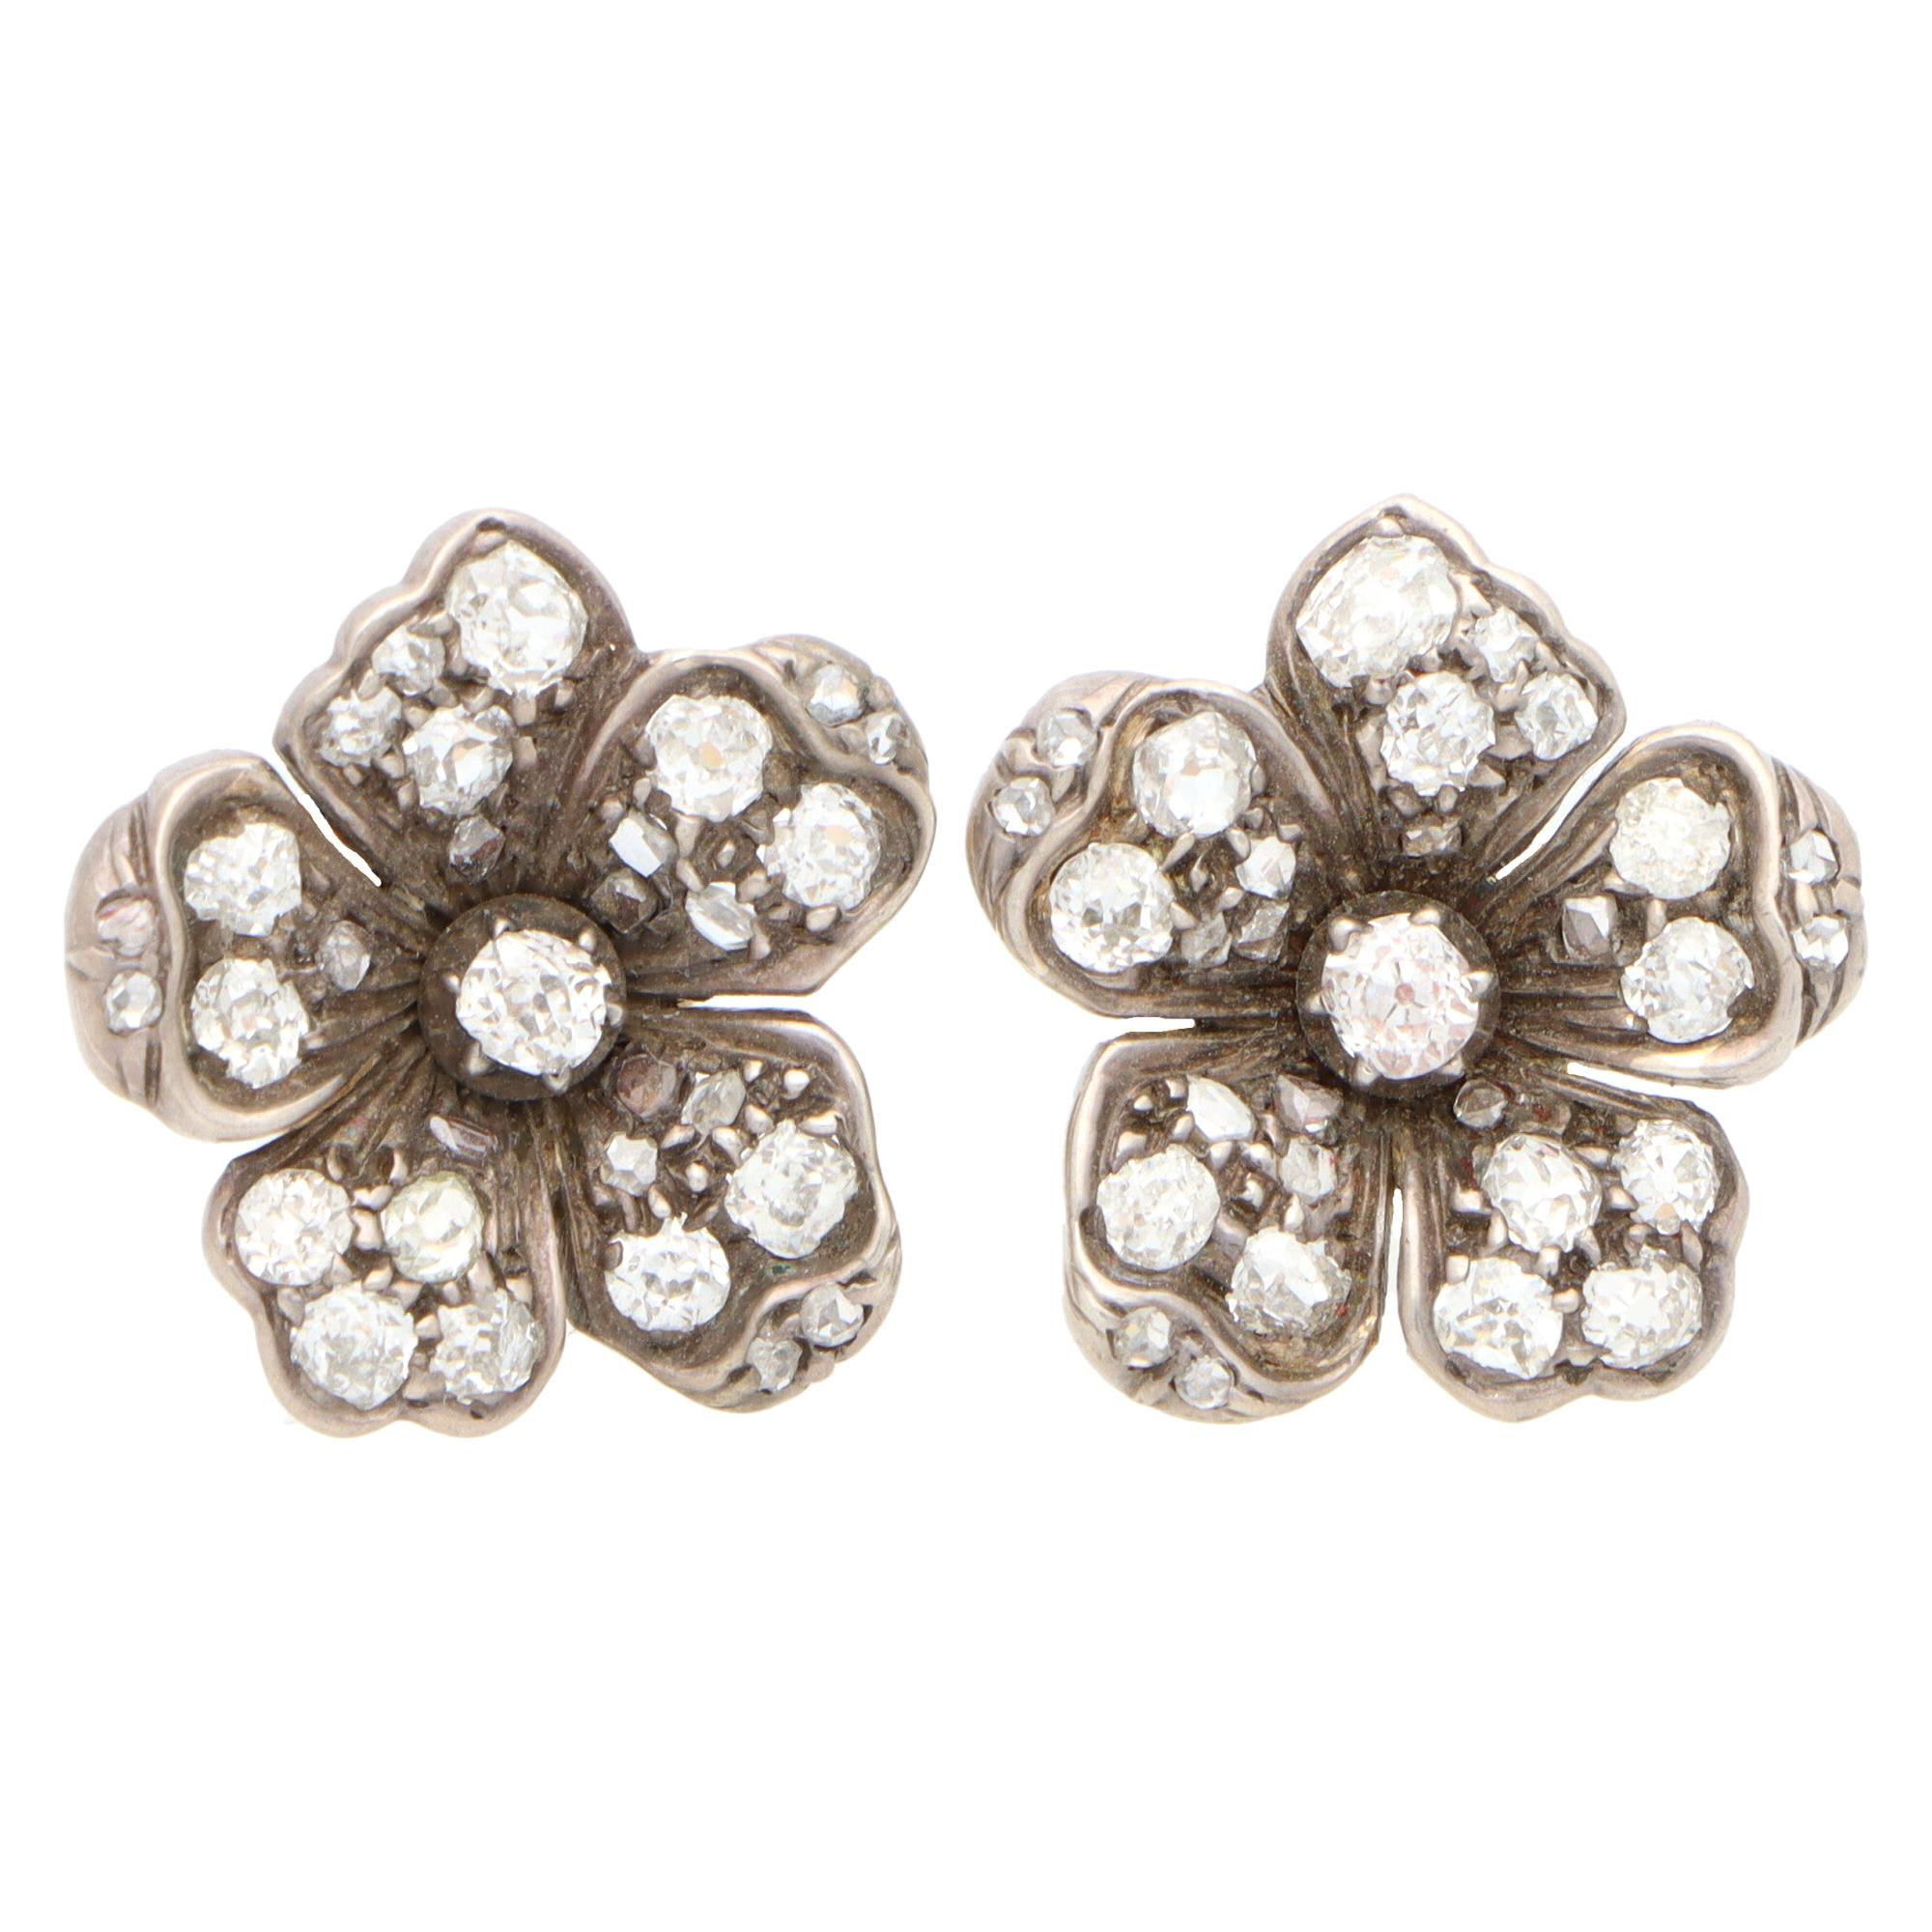 Victorian Old Mine Cut Diamond Flower Cluster Earrings Set in Silver on Gold